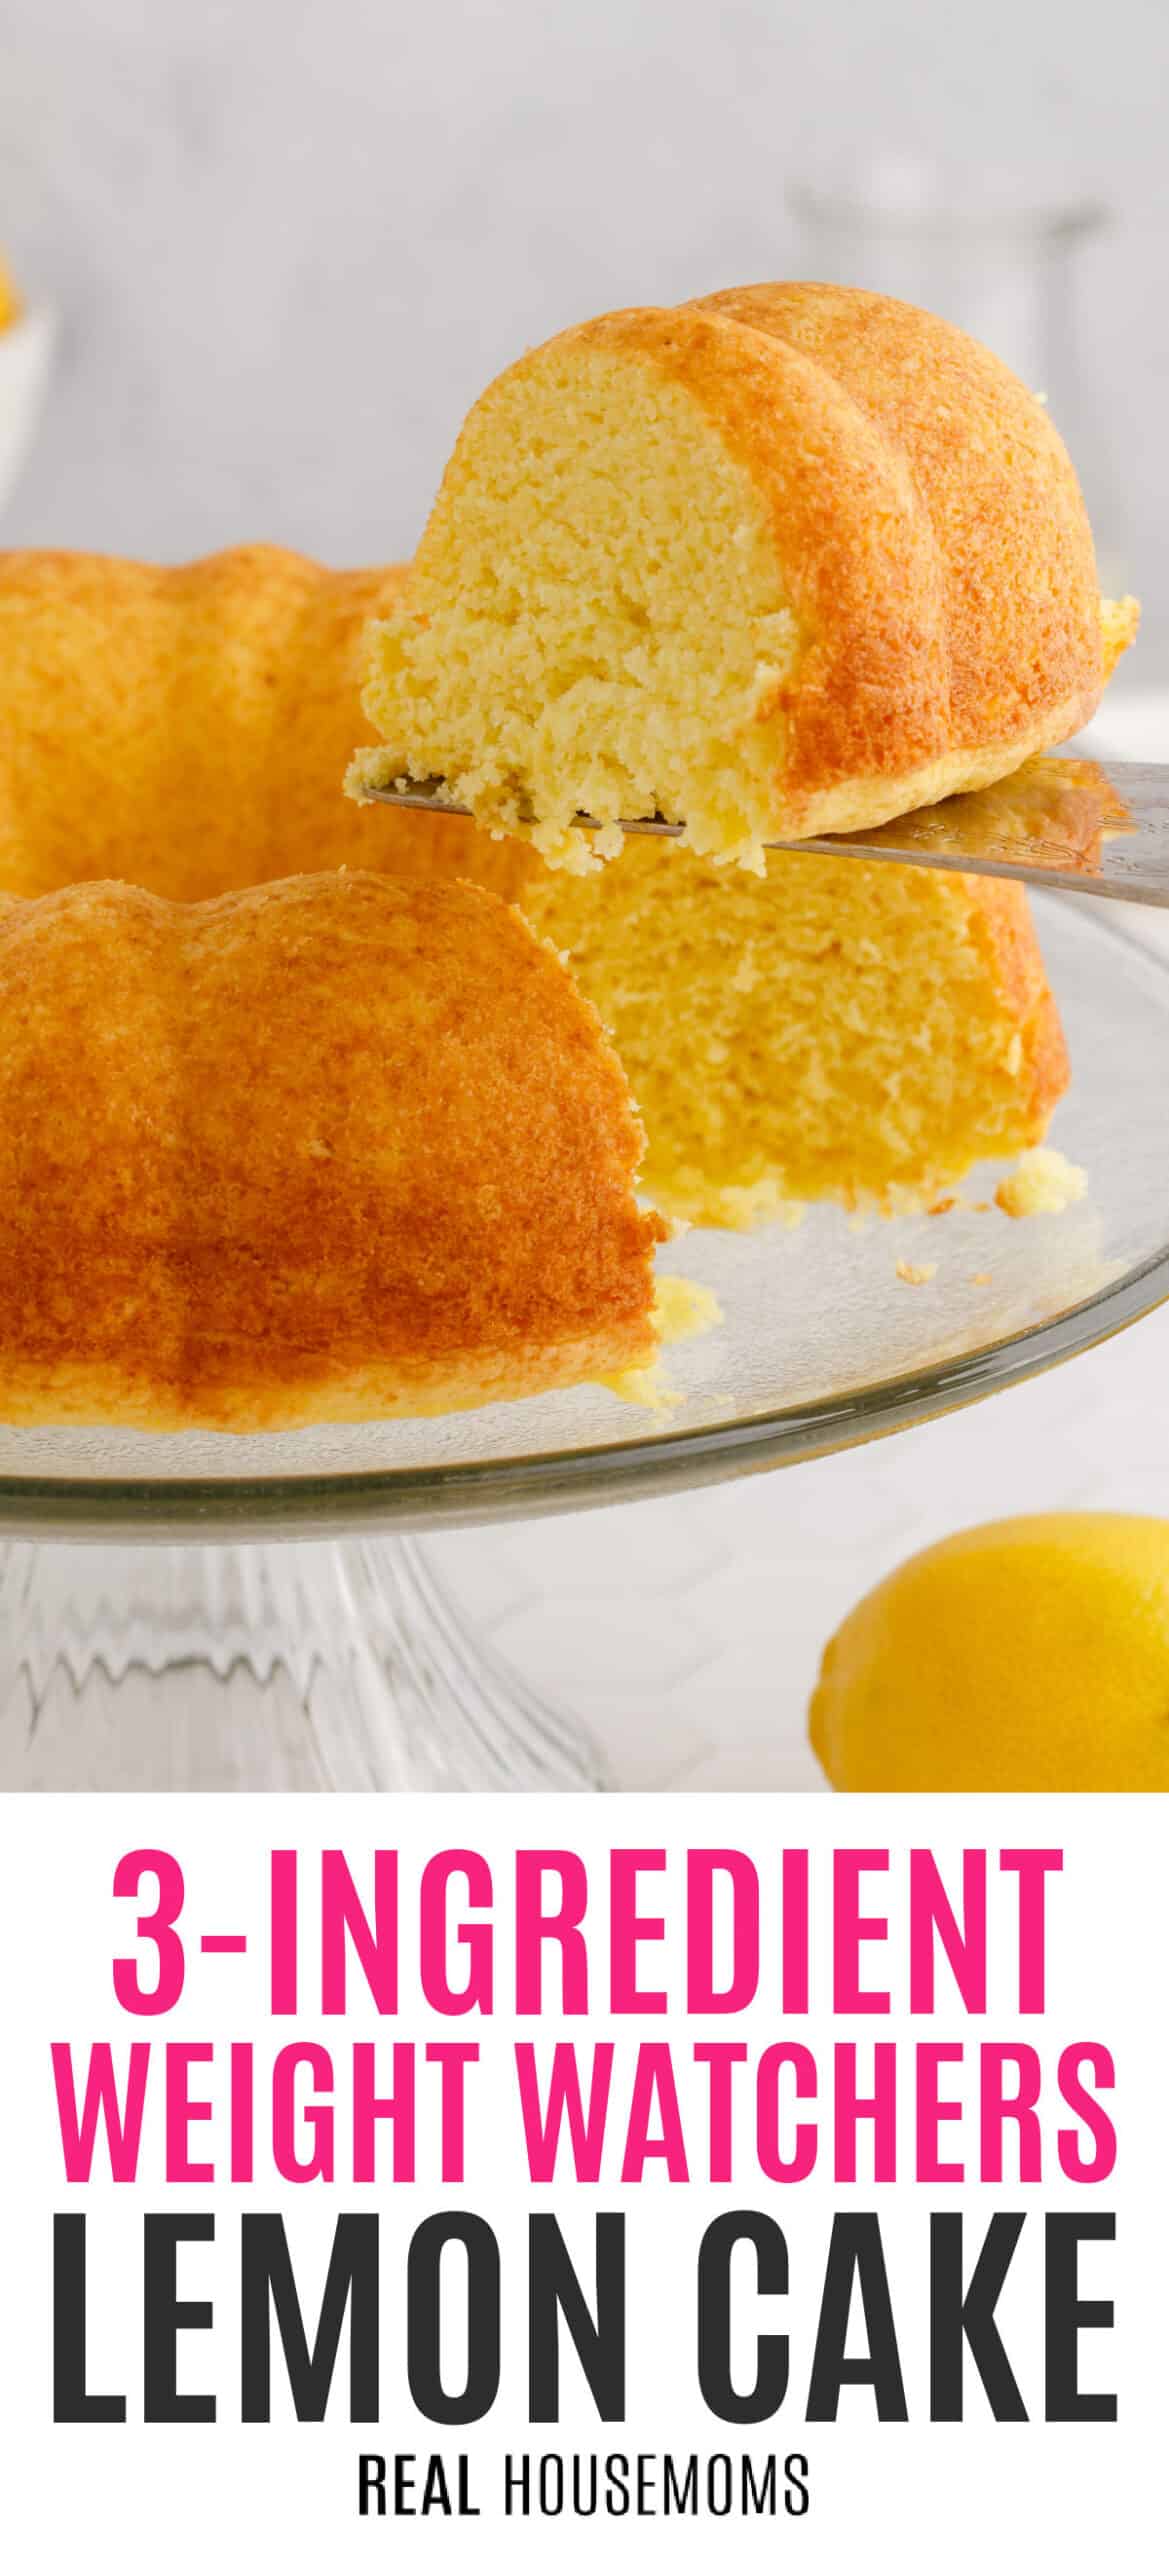 Easy lemon layer cake recipe | BBC Good Food